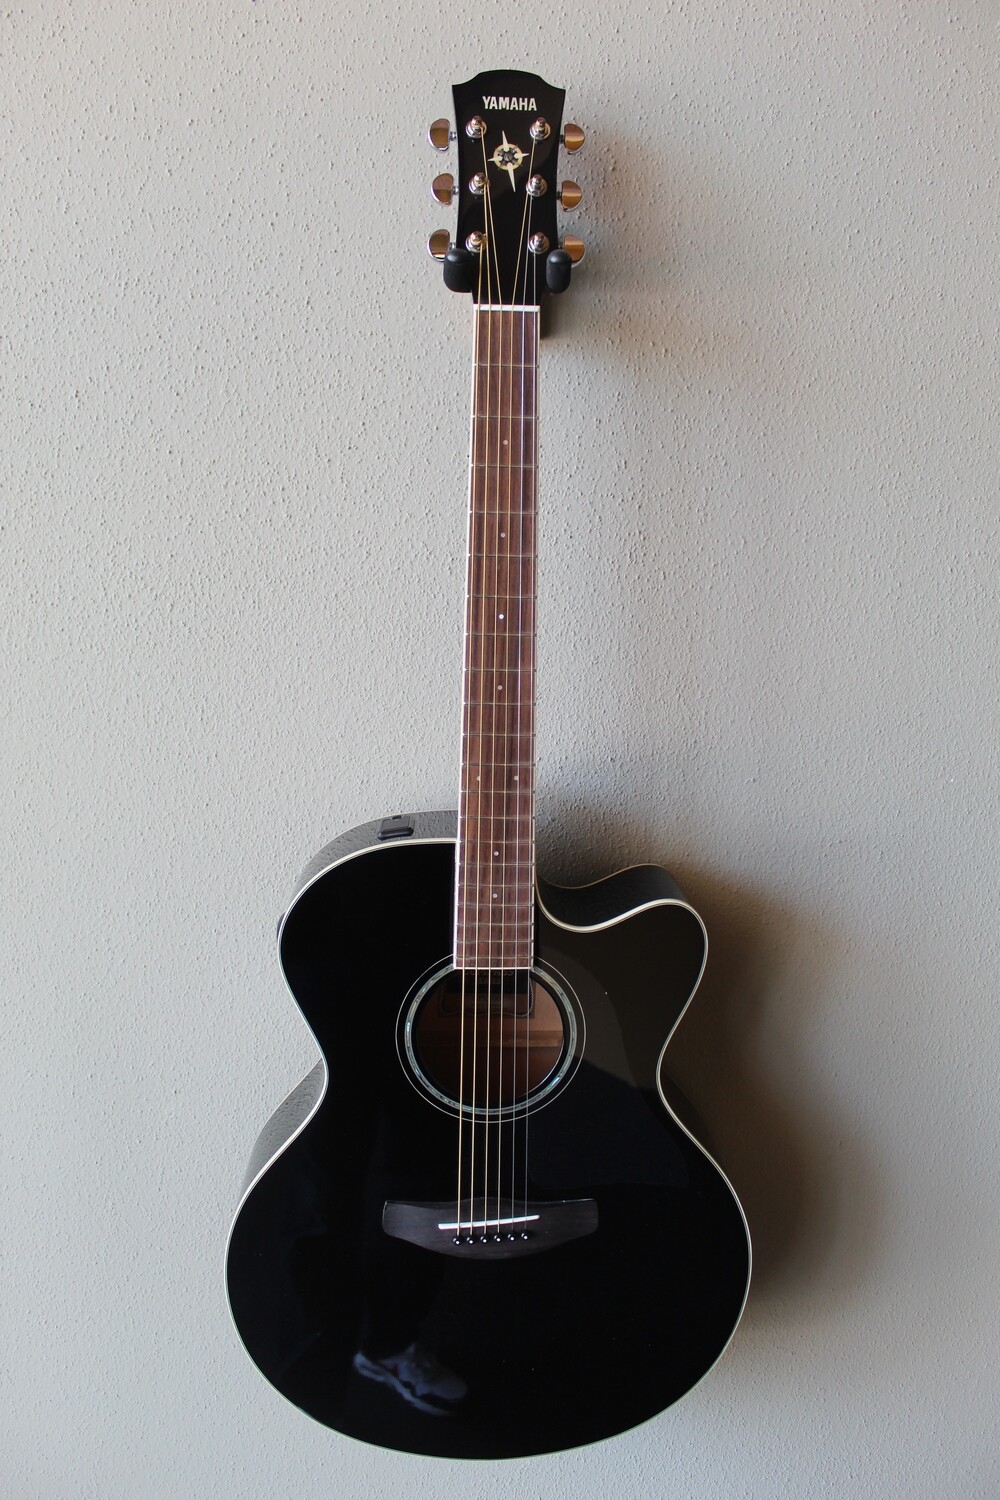 Yamaha CPX600 Medium Jumbo Cutaway Steel String Acoustic Guitar with Gig Bag - Black